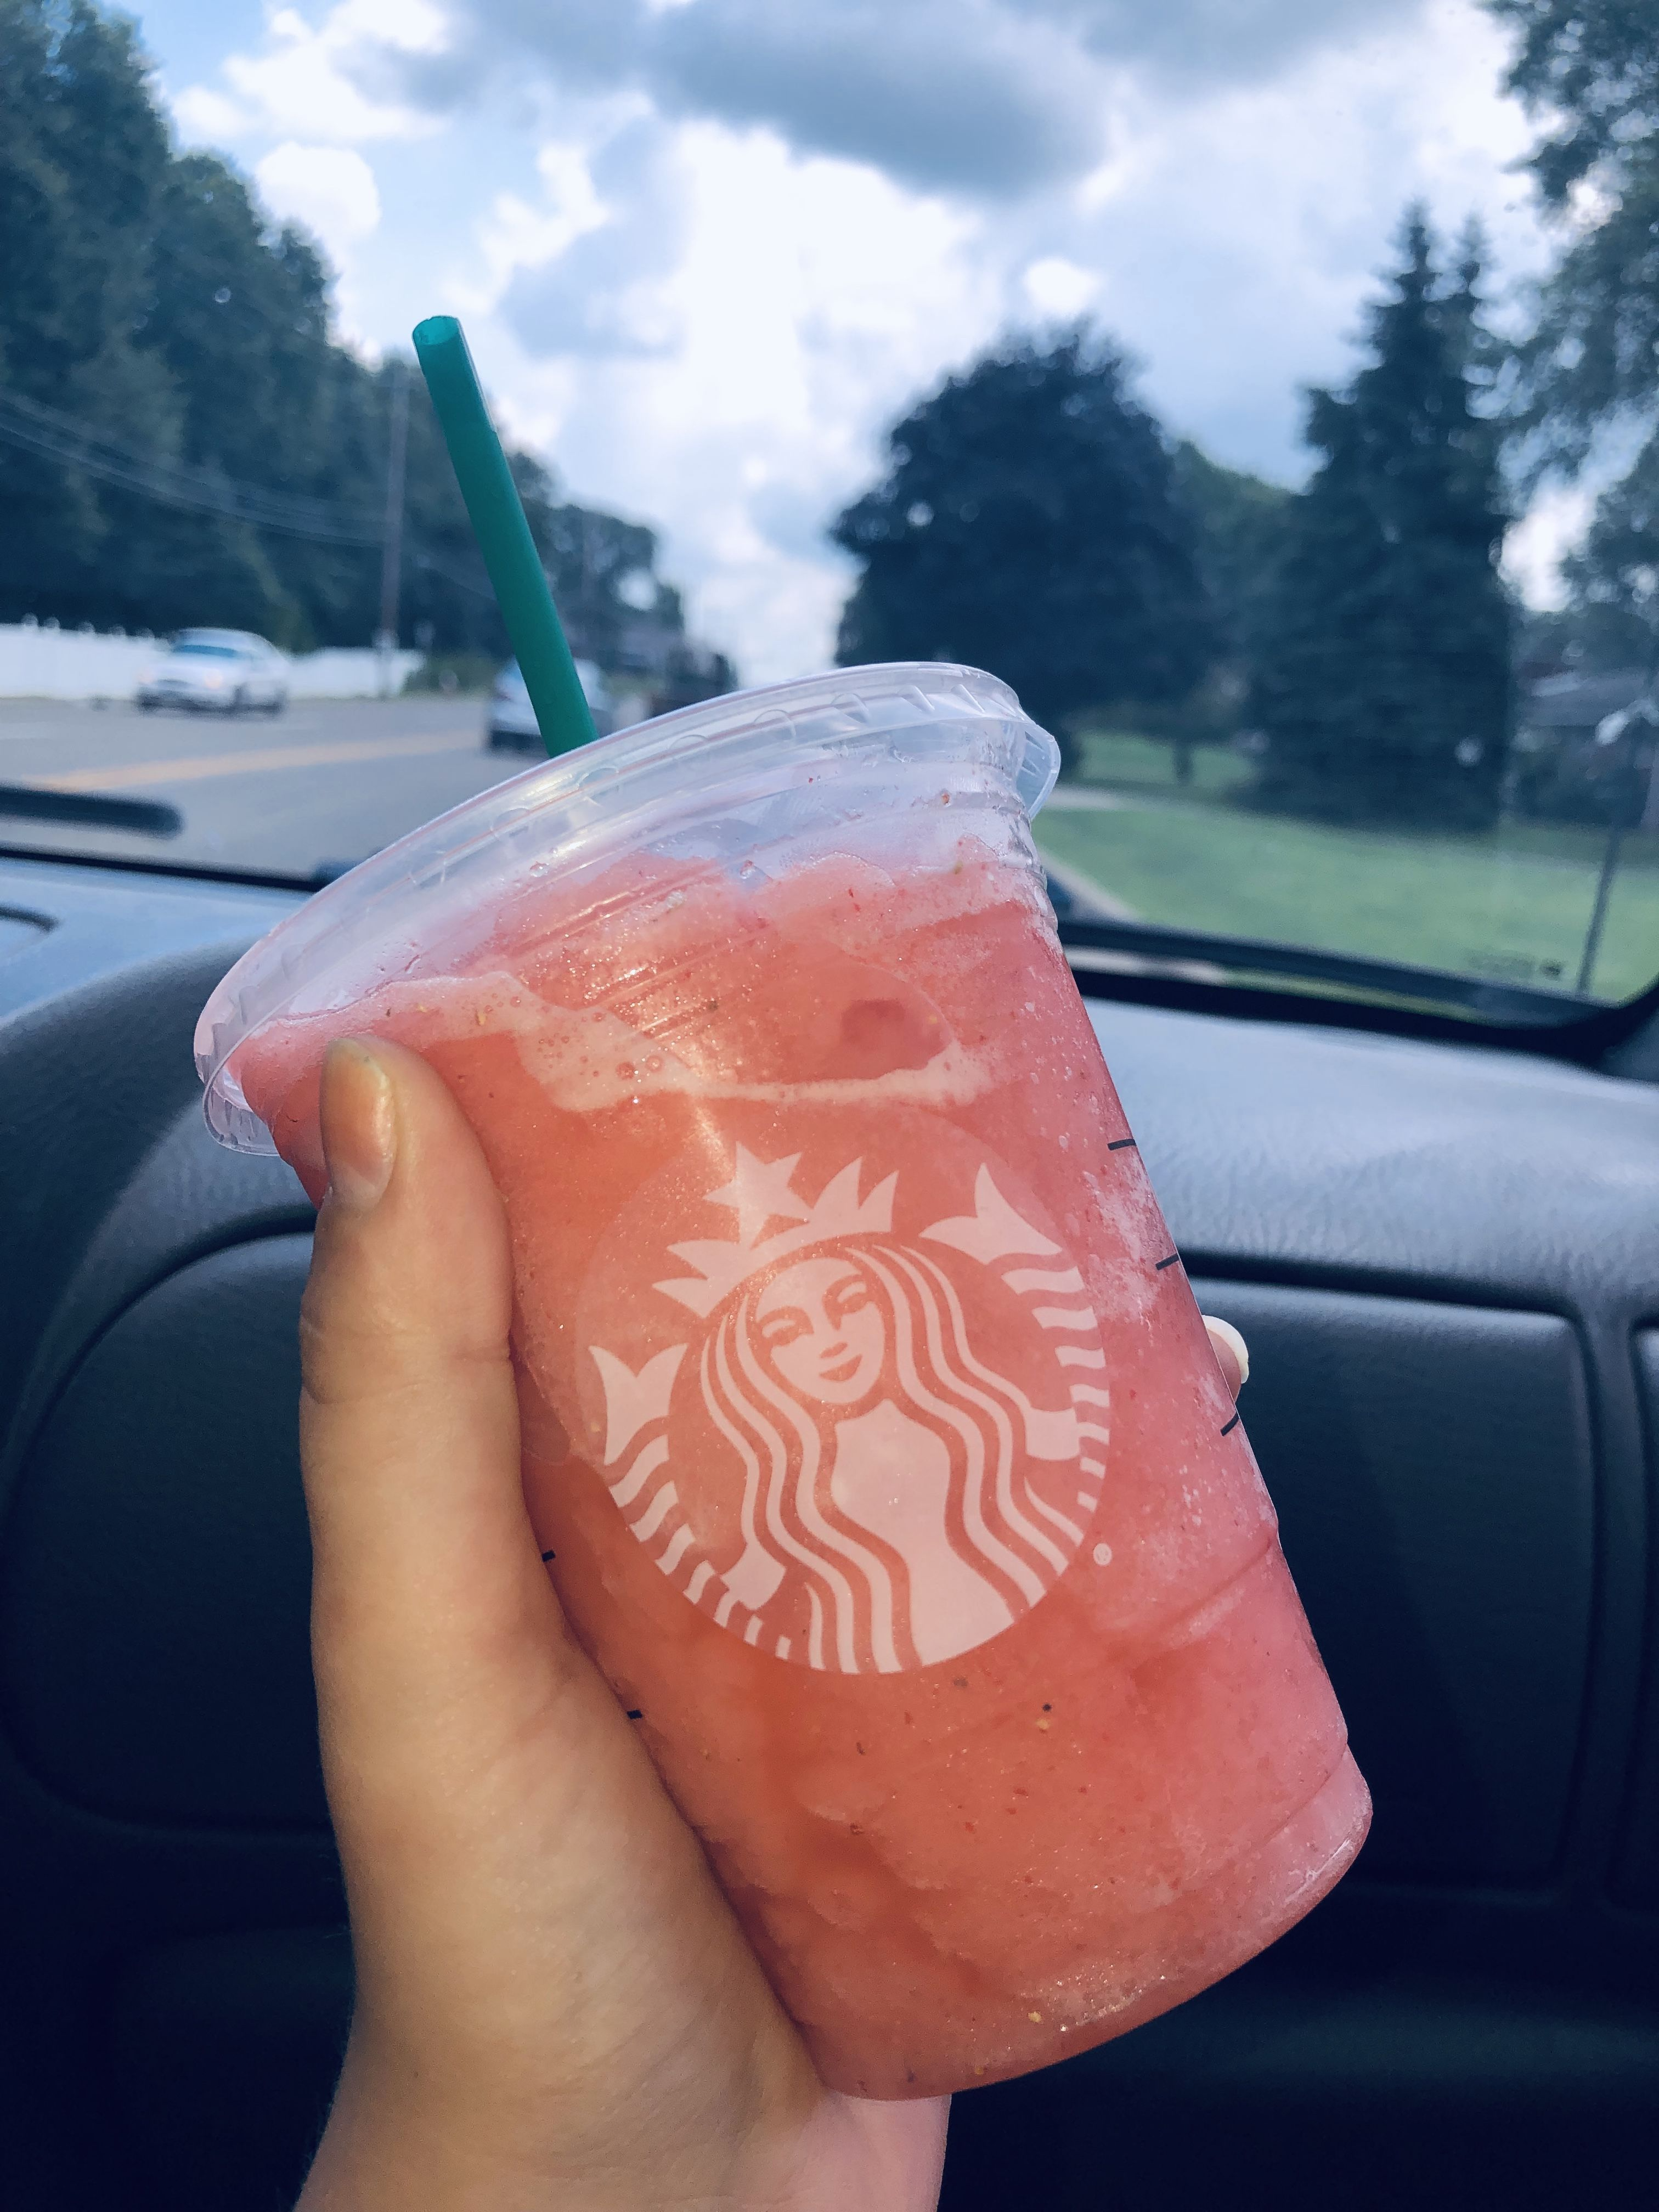 Strawberry Acai Refresher: 16 Famous TikTok Starbucks Drinks That Deserve Your Attention